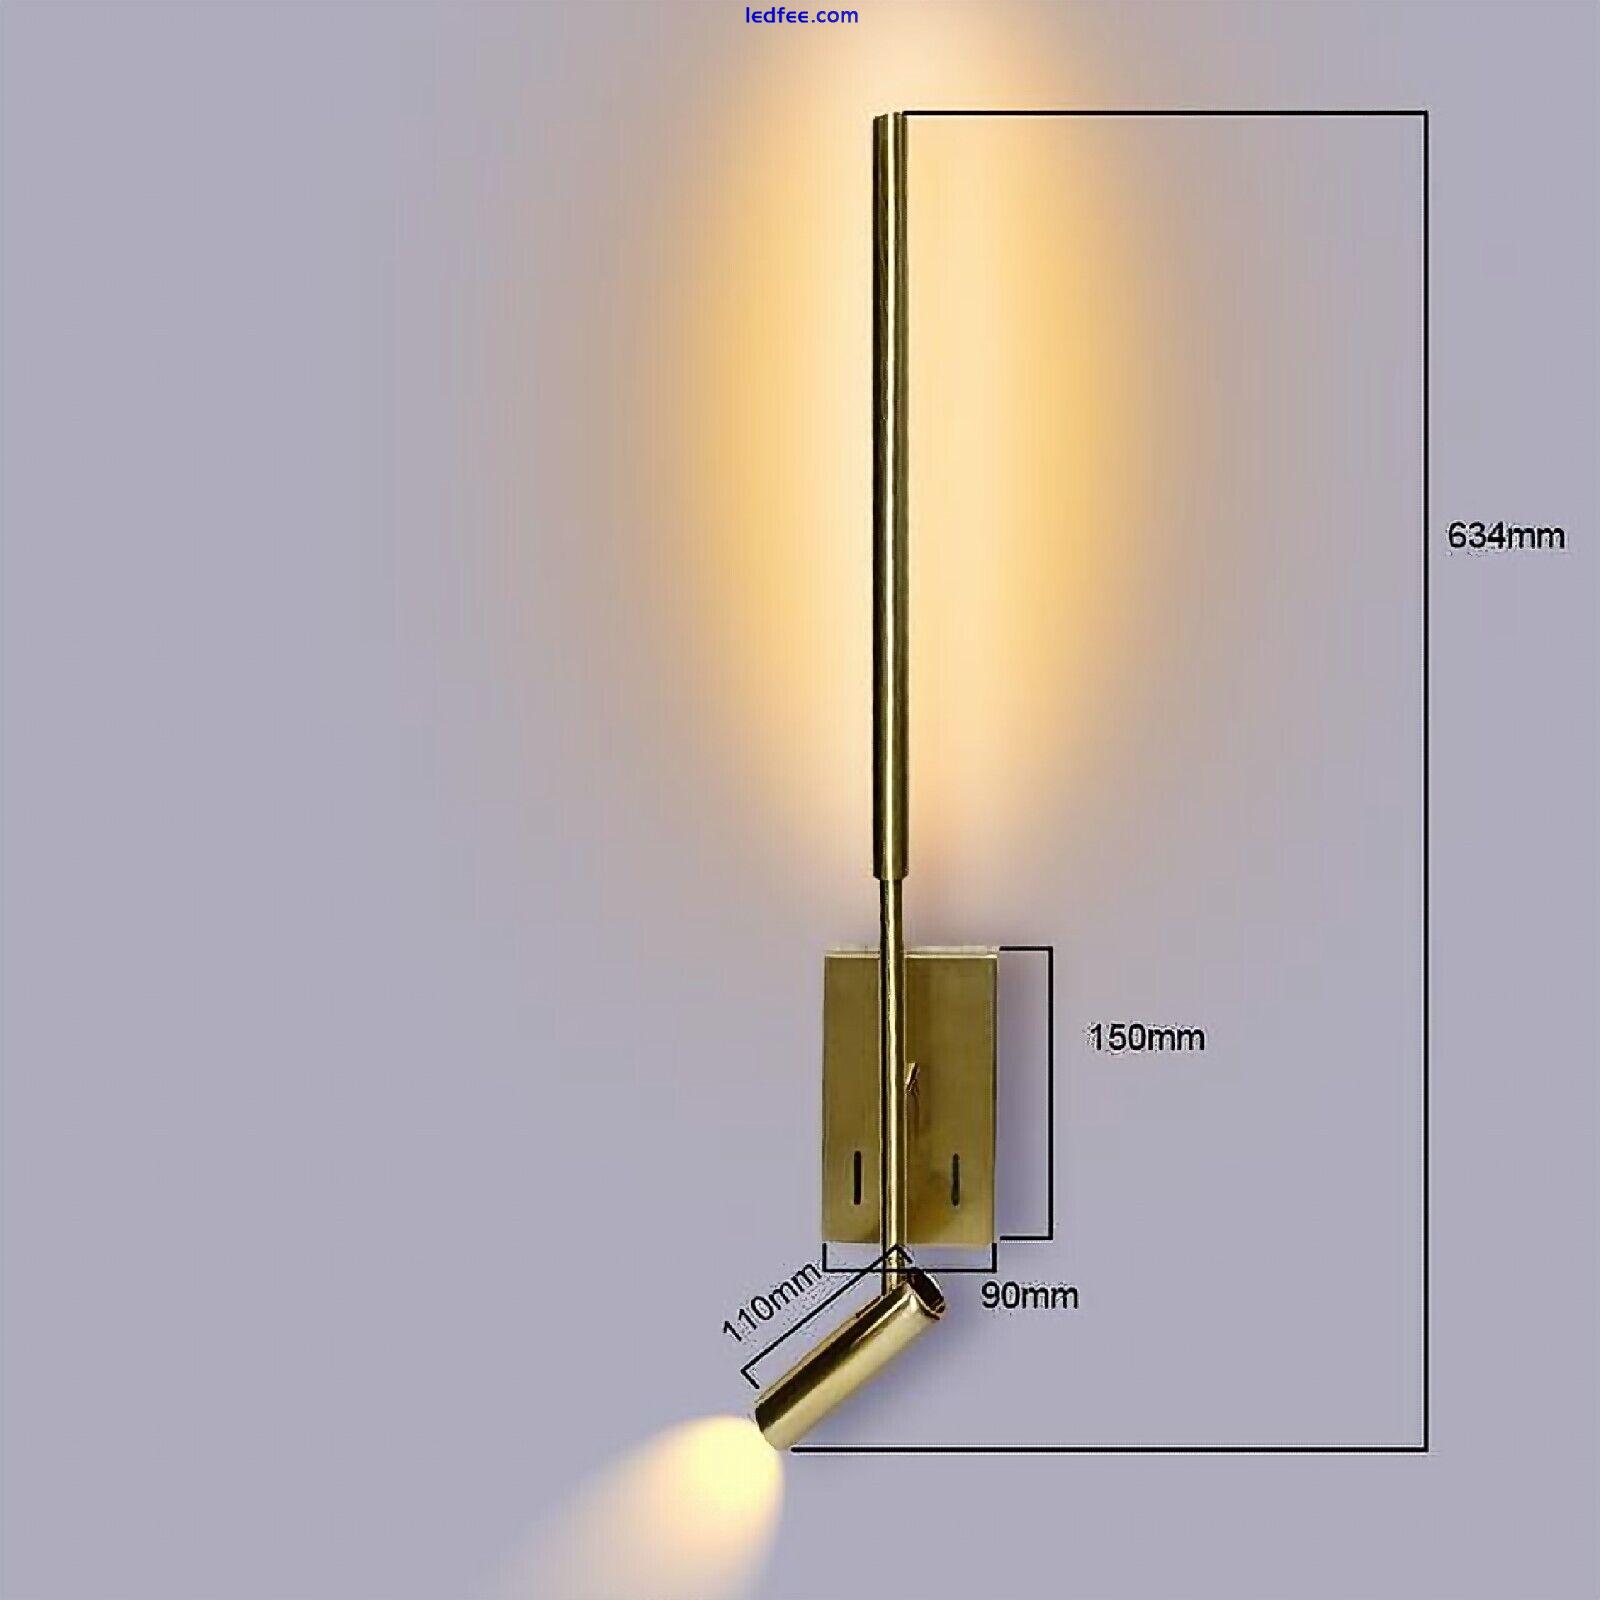 Multi-Angle Rotation LED Wall Spotlight | Wall Sconce Lighting ( FREE SHIPPING ) 0 